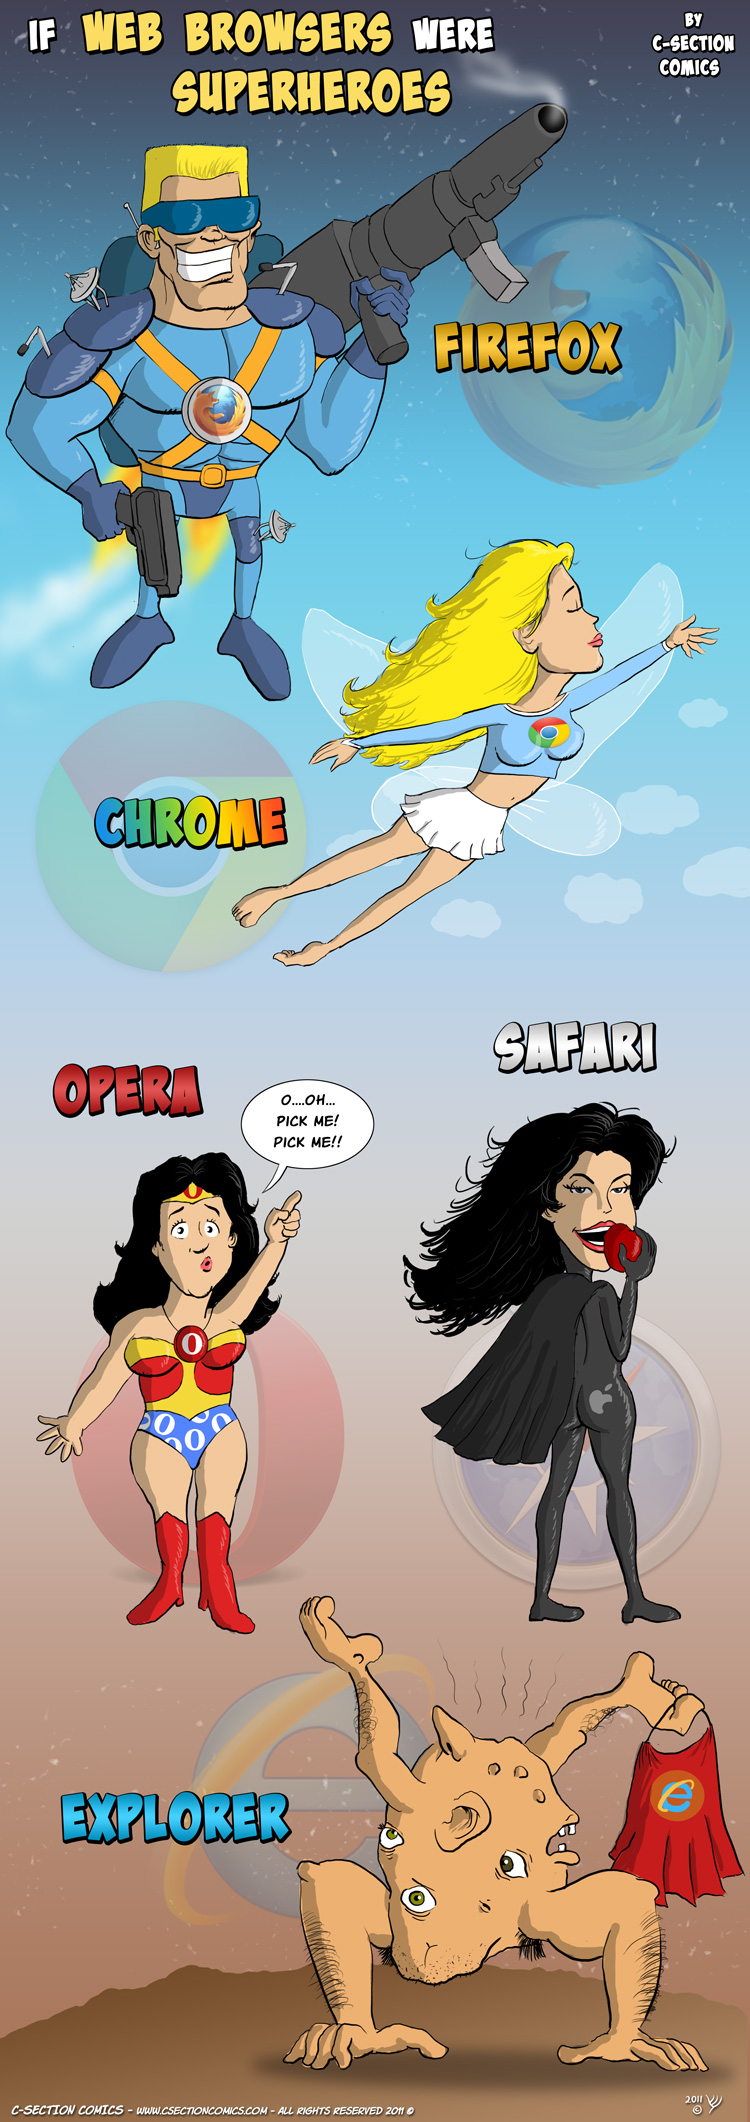 browsers_superheroes_comic